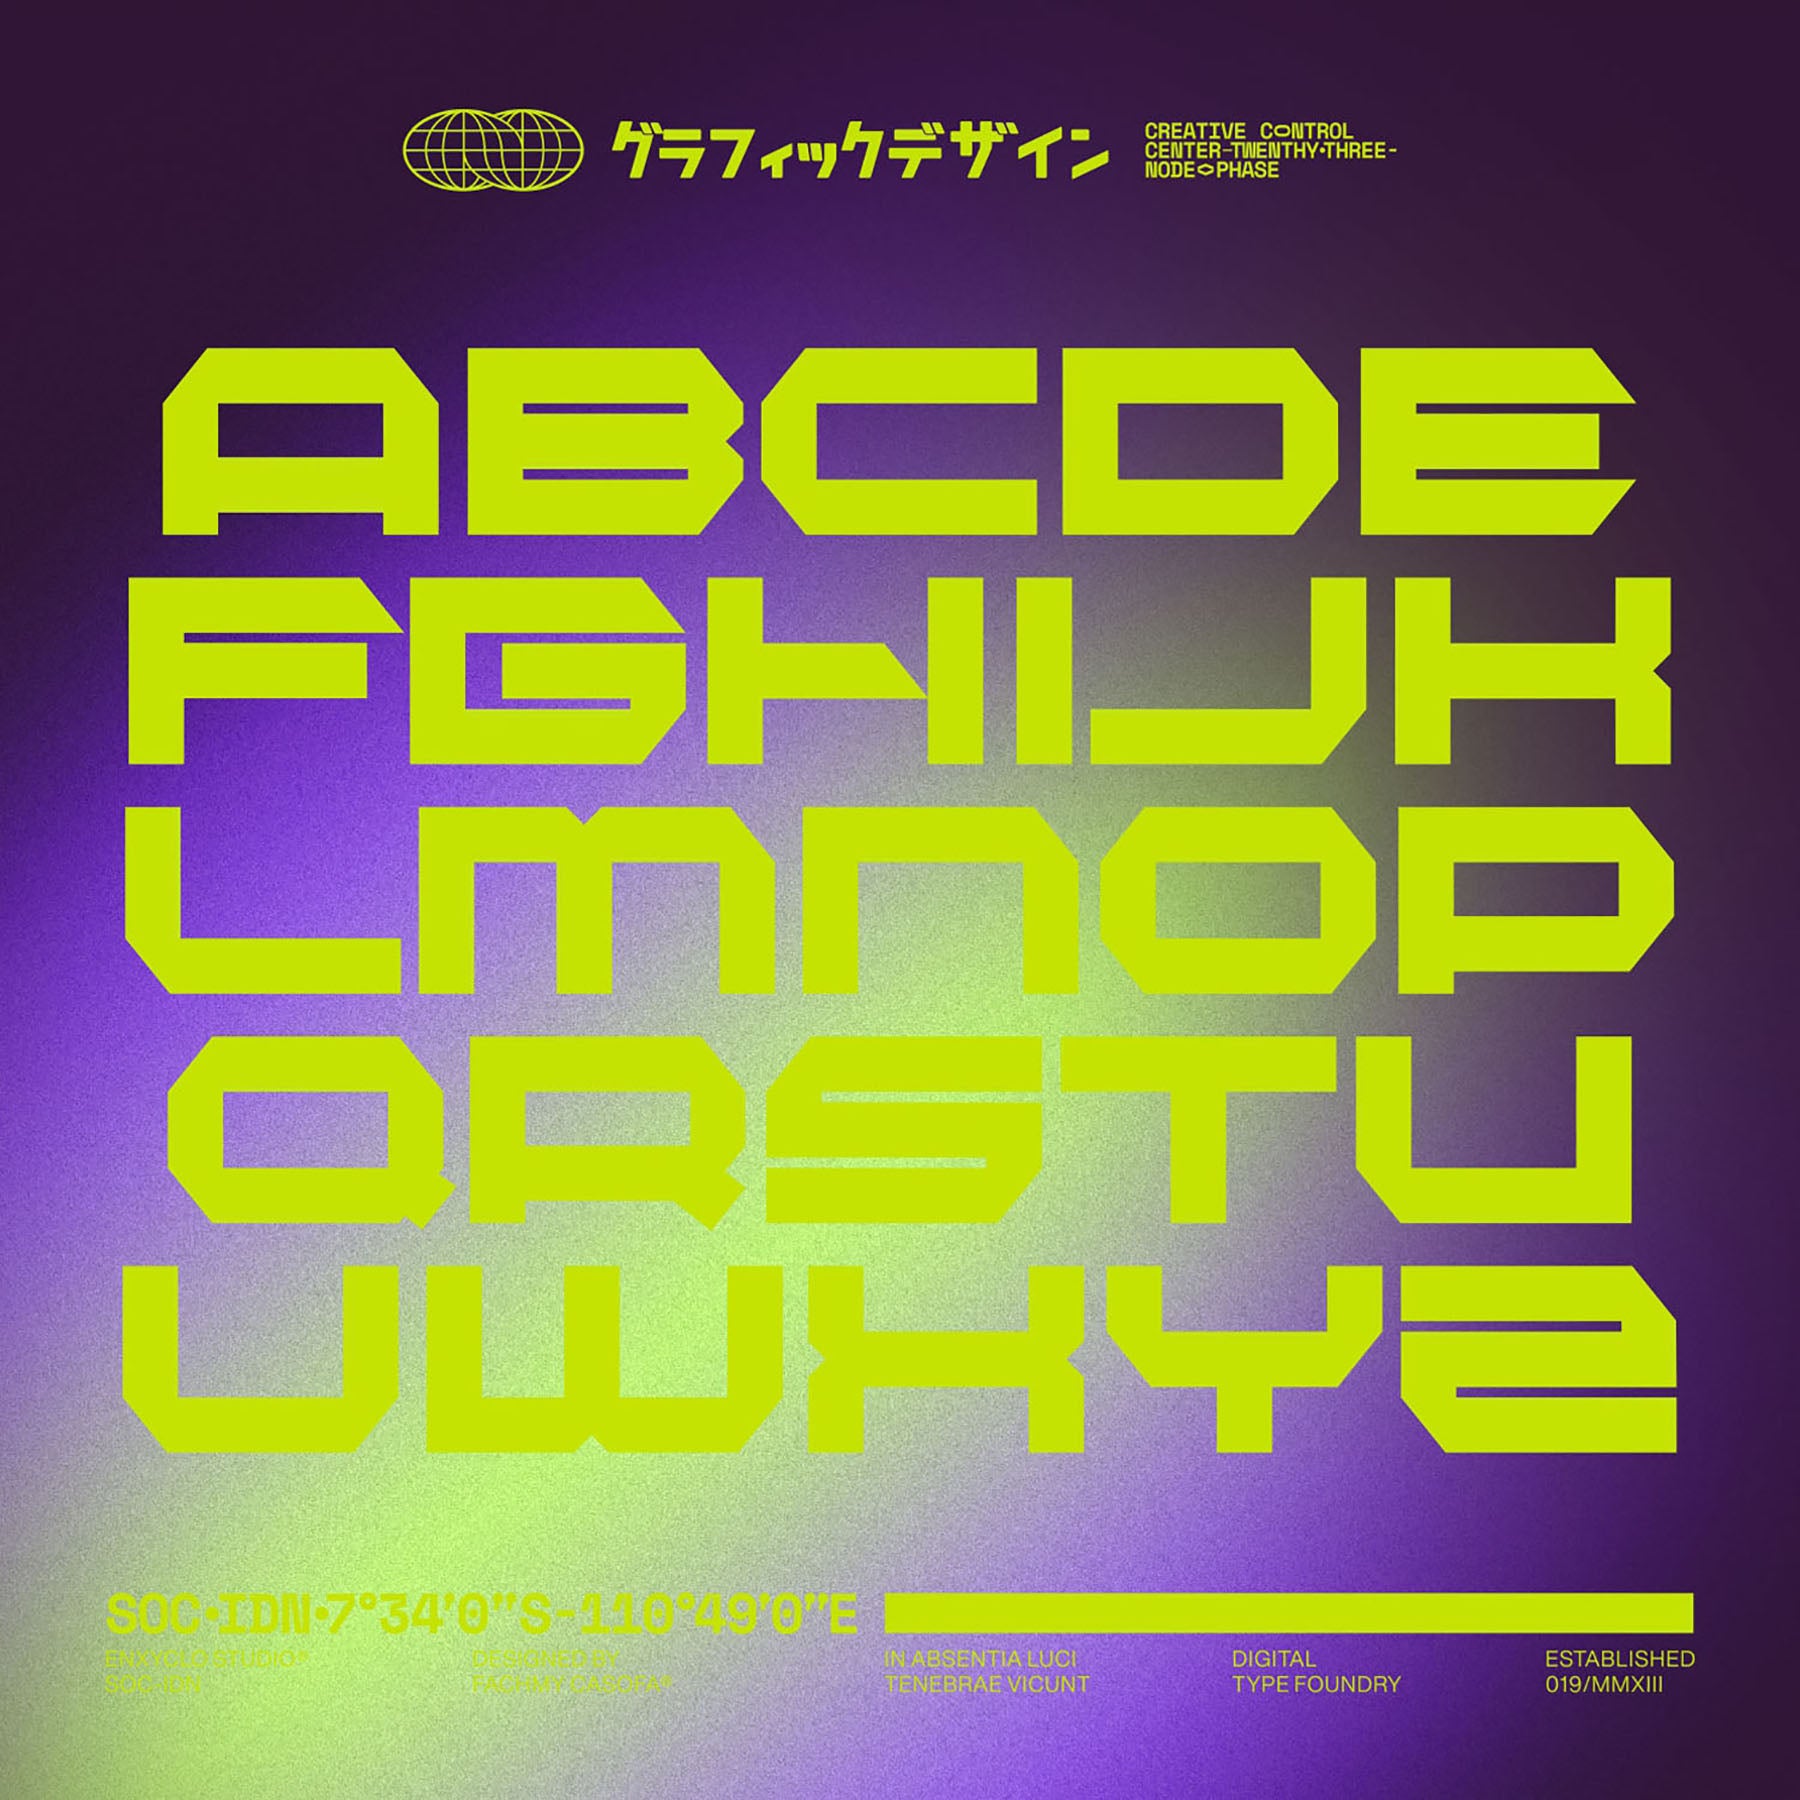 BEXAGO Typeface